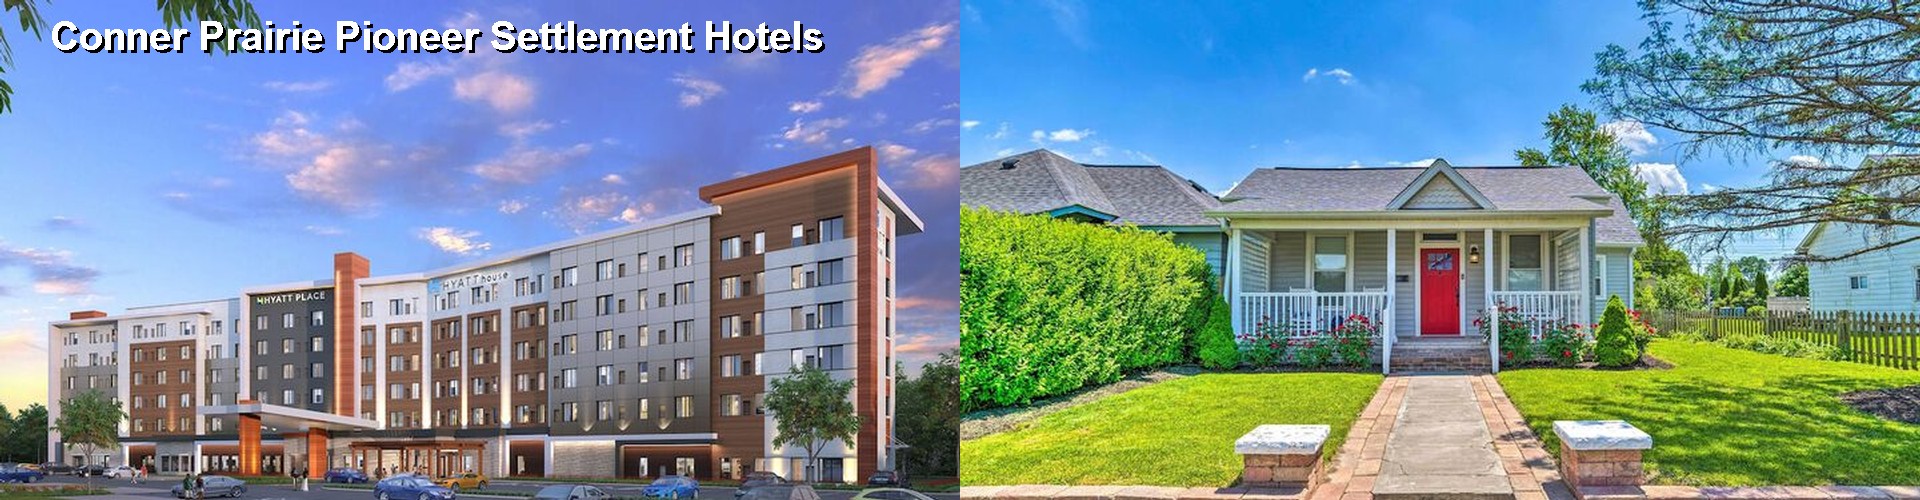 3 Best Hotels near Conner Prairie Pioneer Settlement